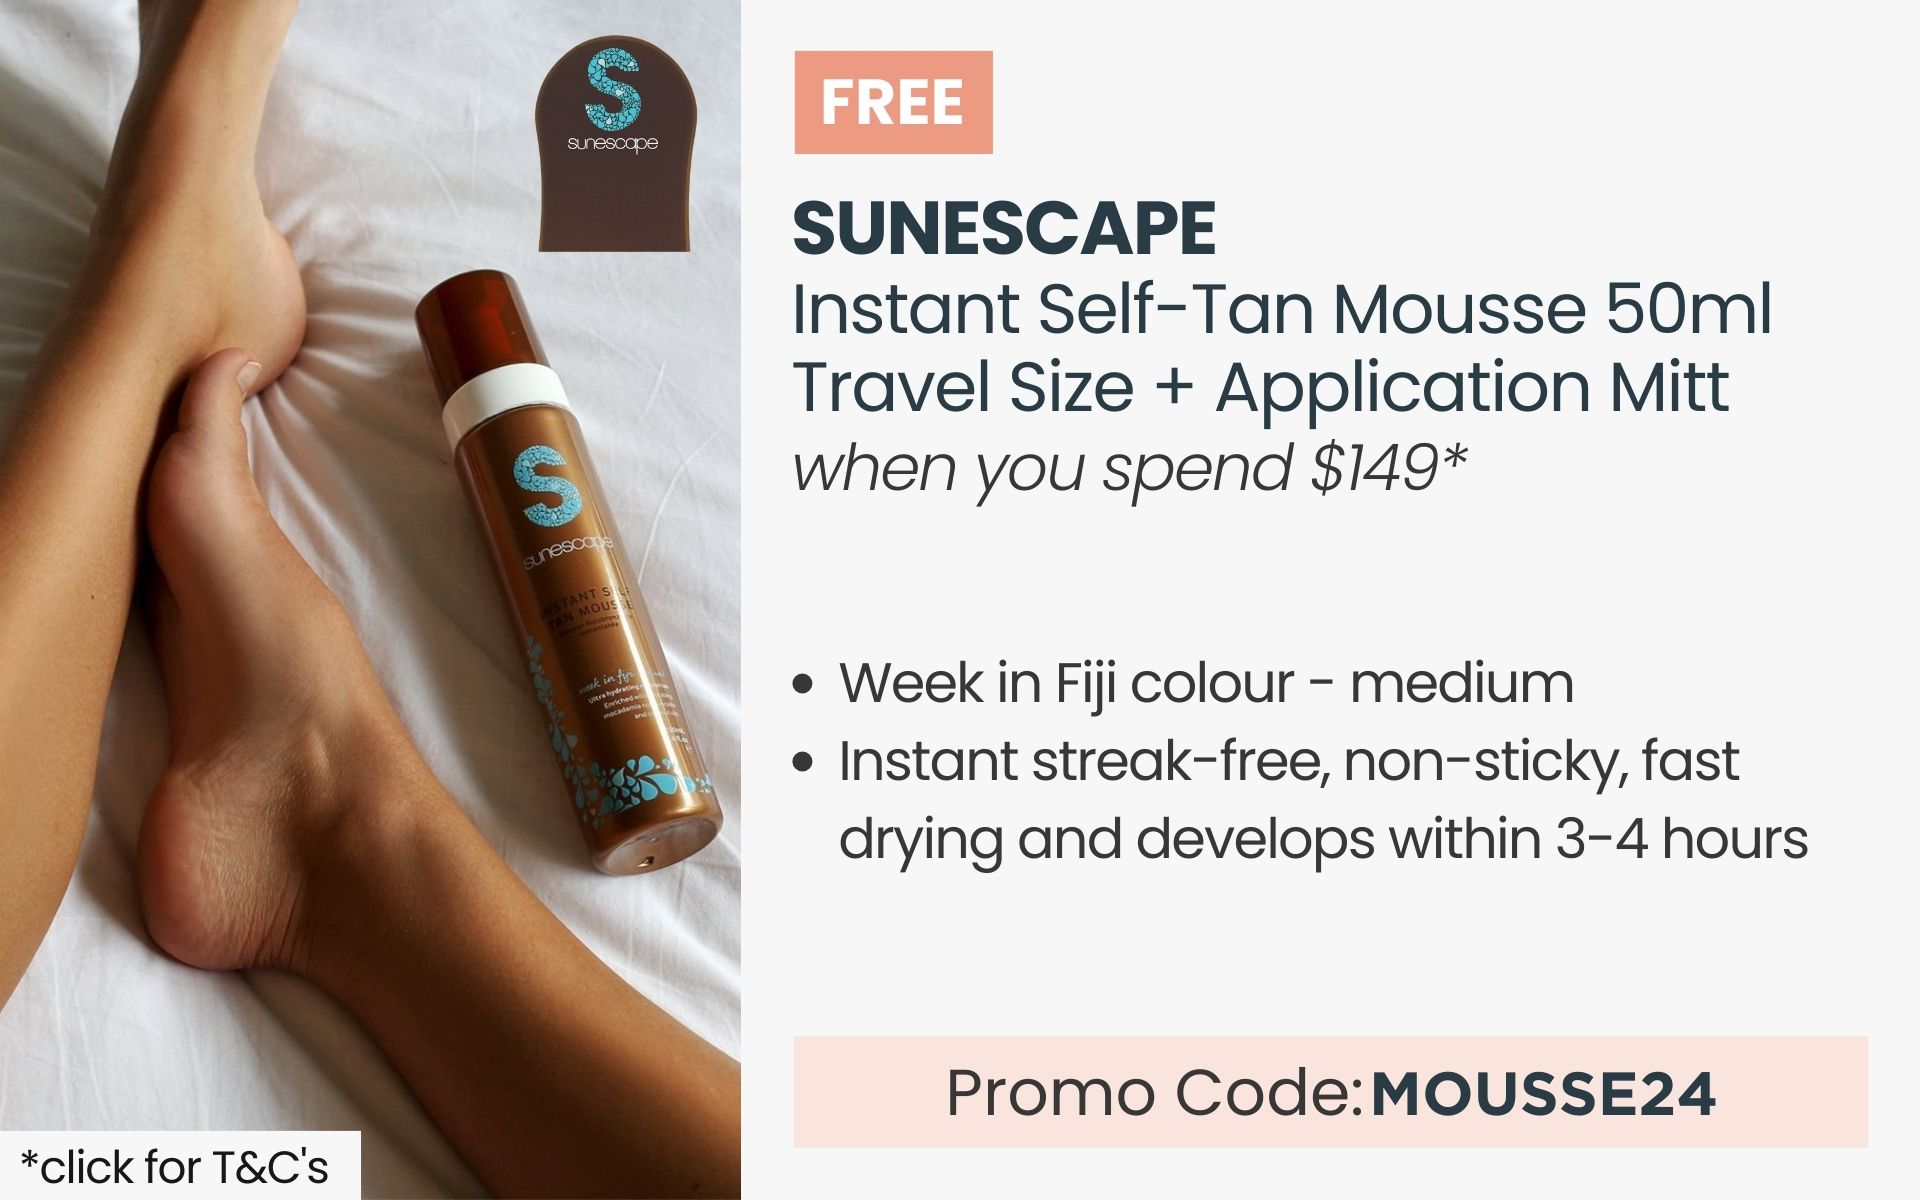 FREE Sunescape Instant Self-Tan Mousse + Application Mitt. Min spend $249. Promo code: MOUSSE24 